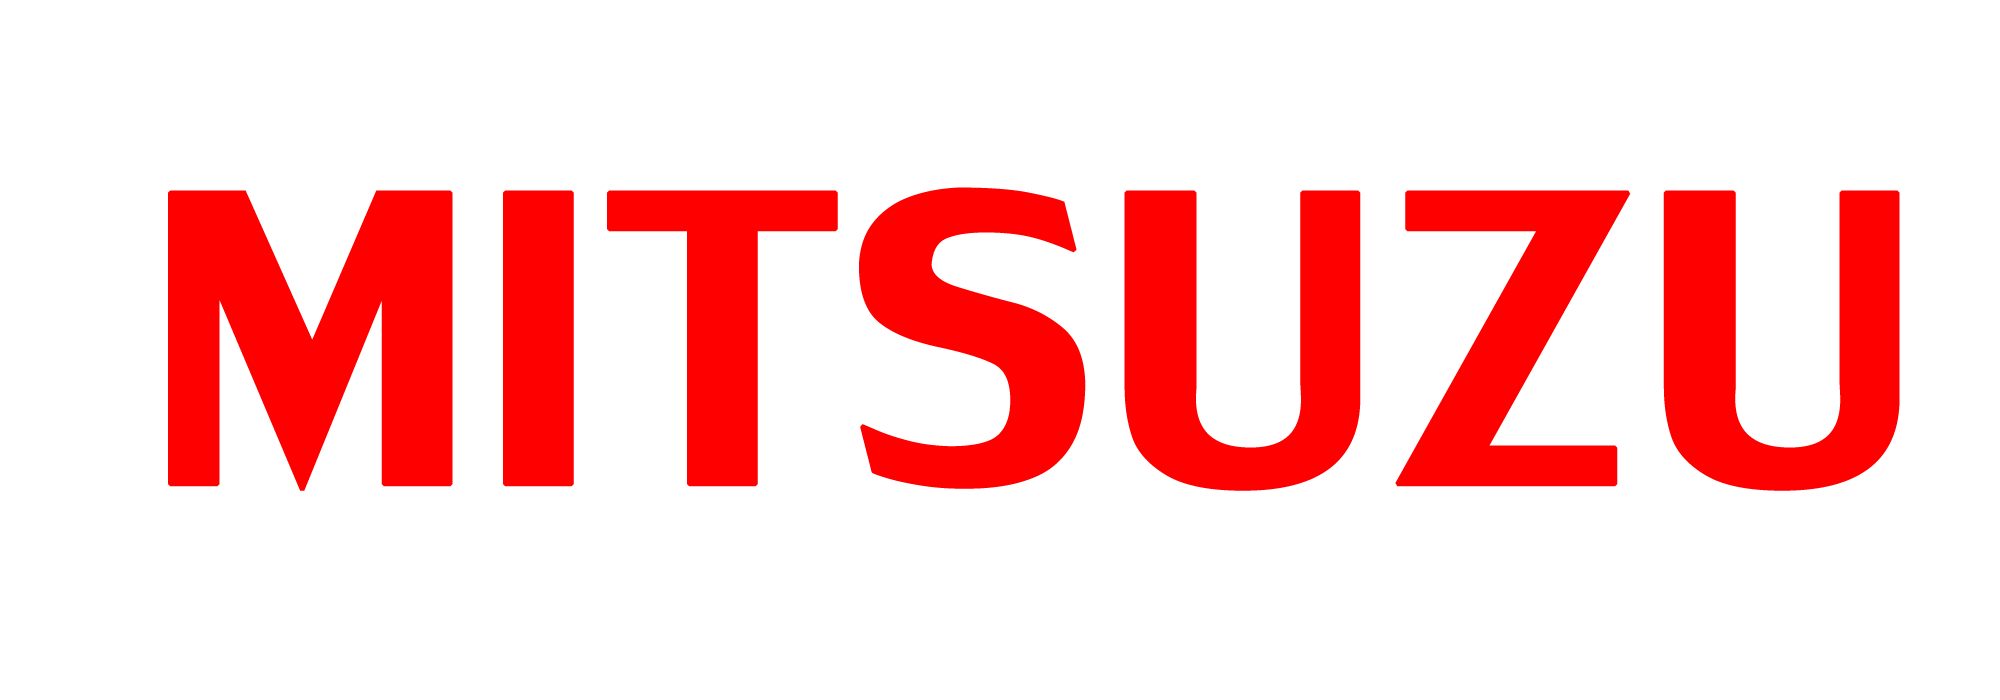 MITSUZU Corp. International